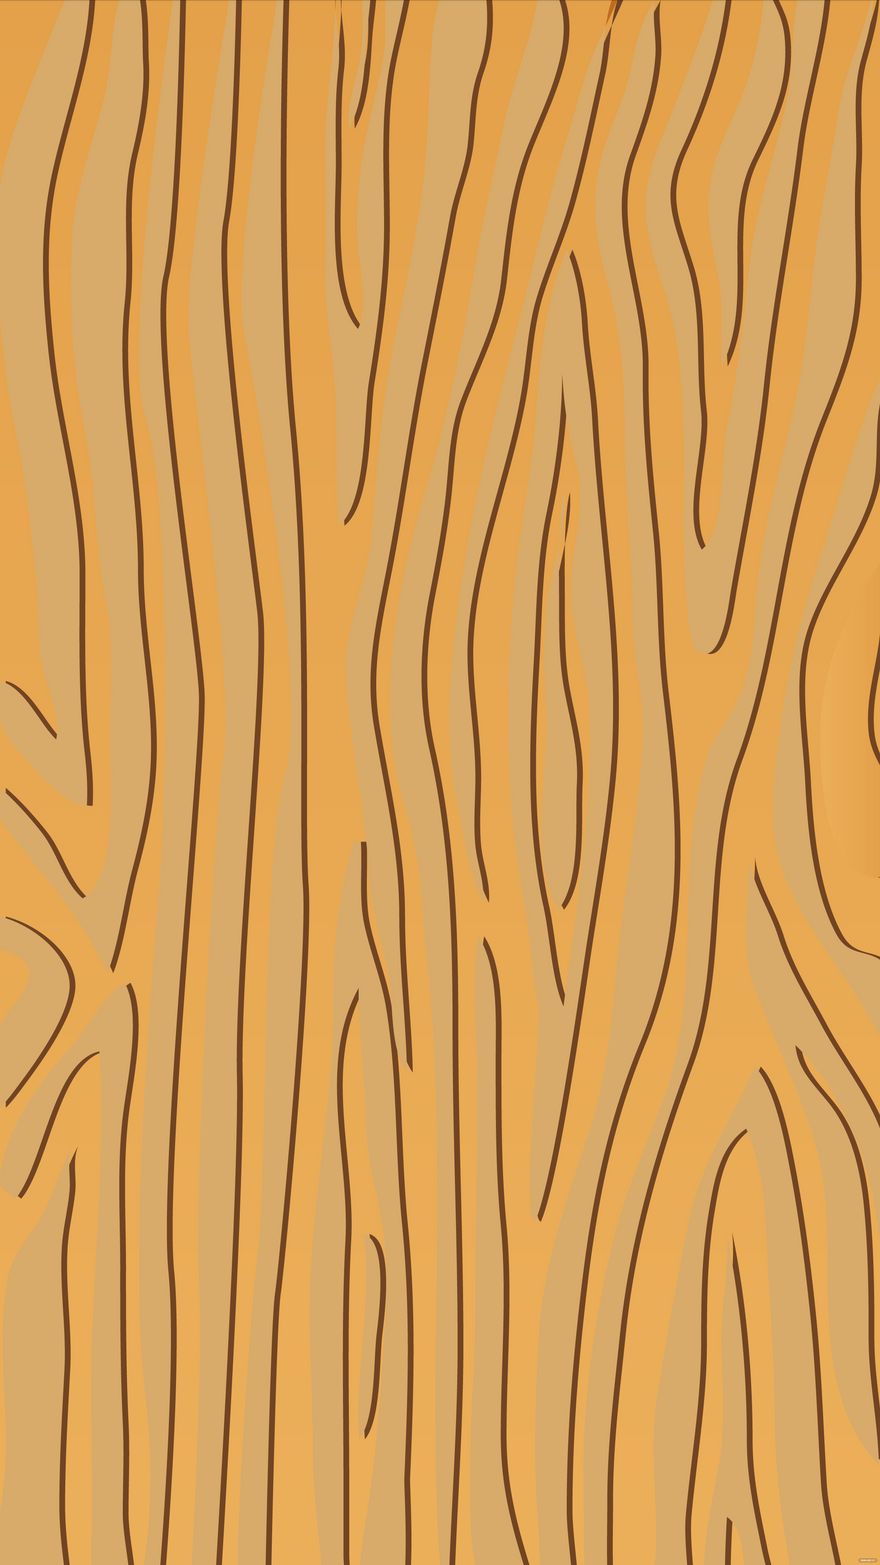 Wood Iphone Background in Illustrator, EPS, SVG, JPG, PNG